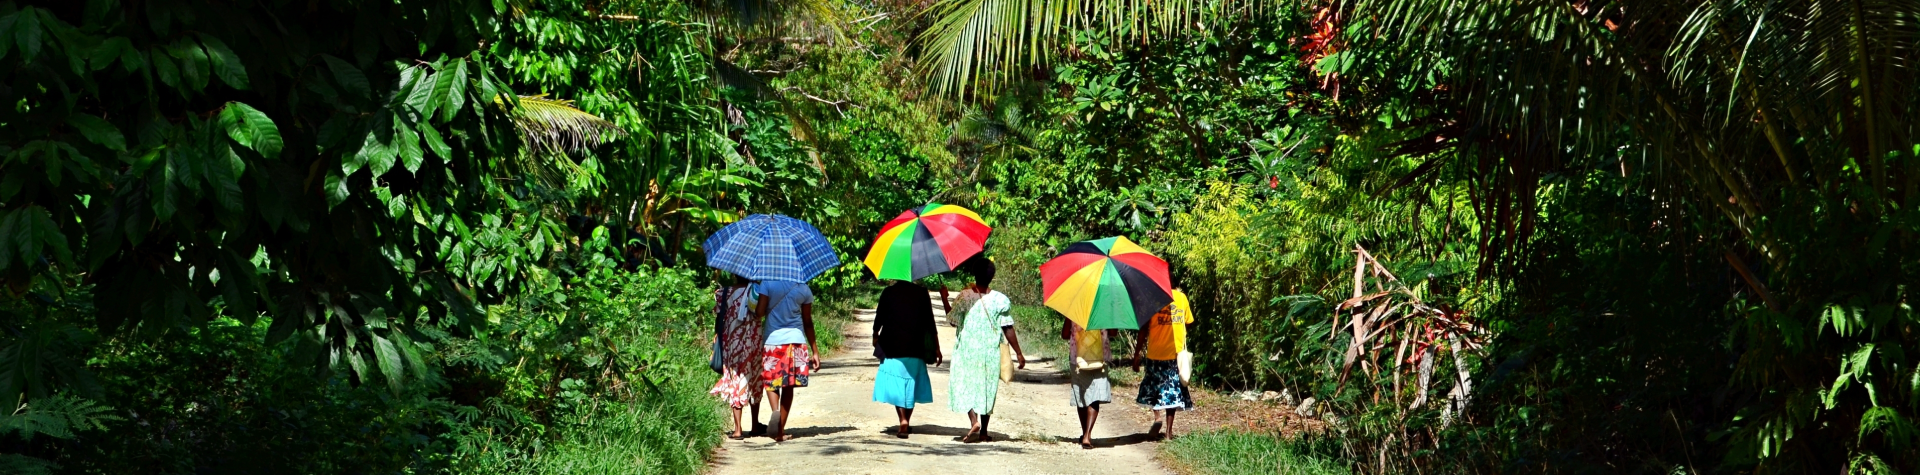 L’évangile au bout du monde - Vanuatu